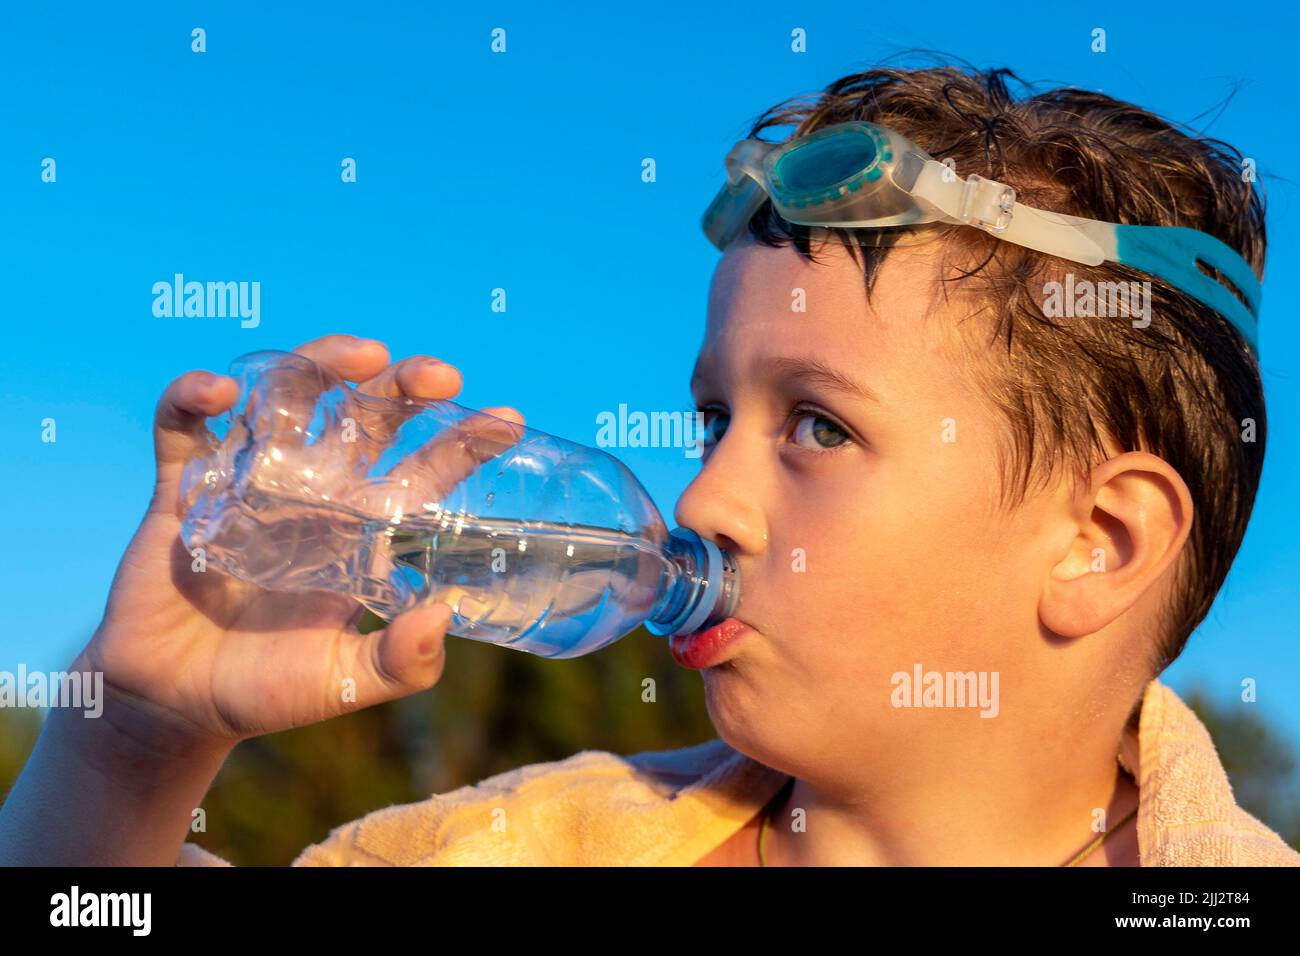 https://c8.alamy.com/comp/2JJ2T84/happy-boy-in-swimming-glasses-drinks-water-from-a-bottle-on-the-beach-2JJ2T84.jpg